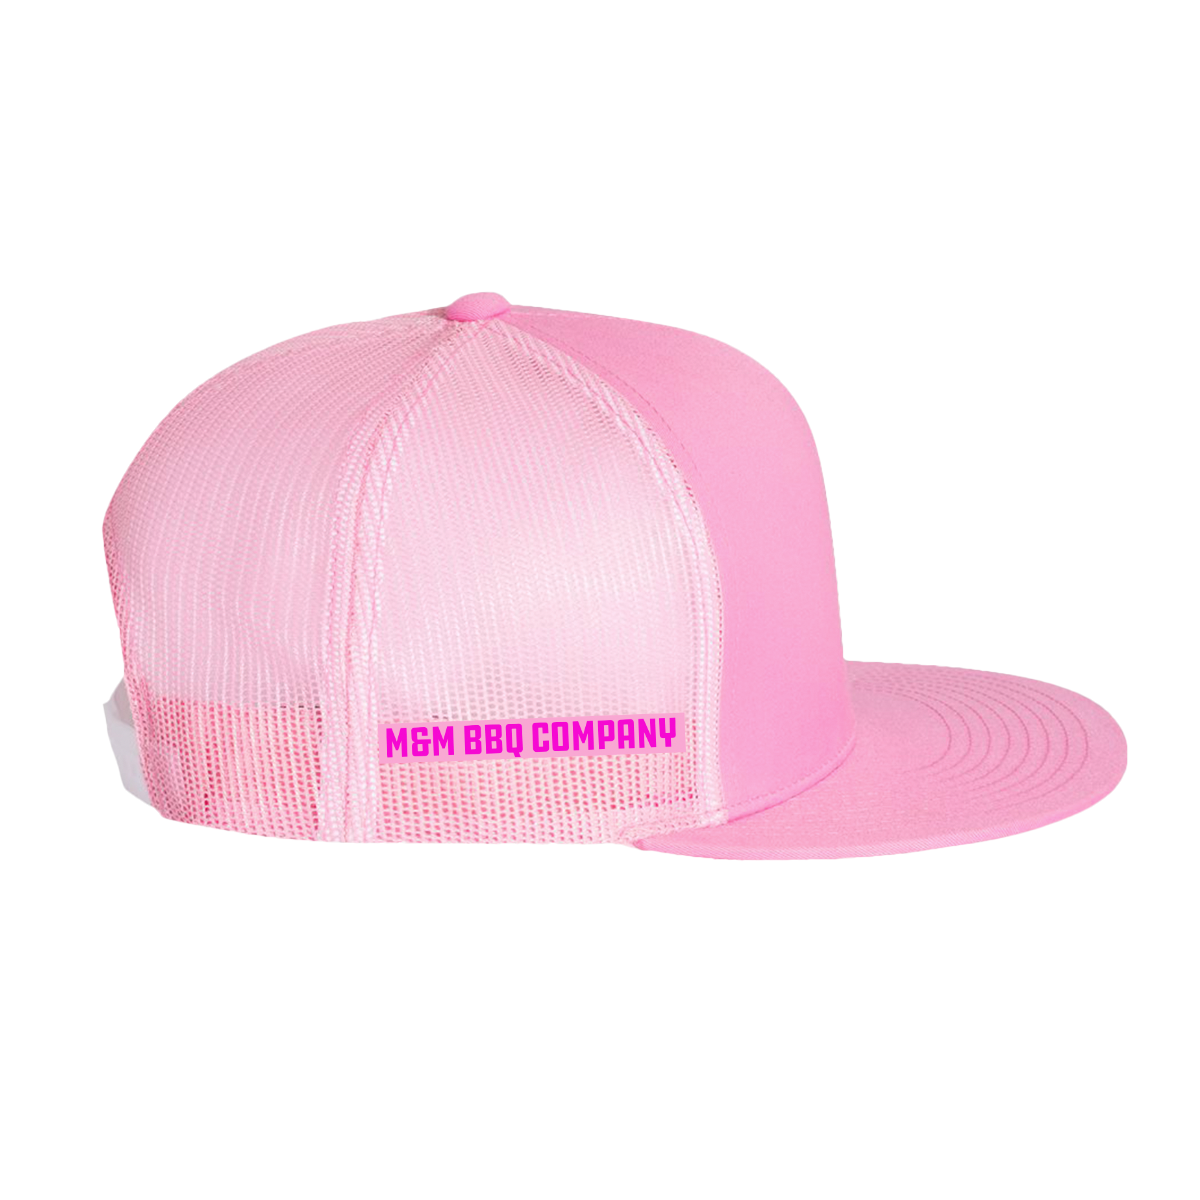 M&M BBQ Company Pink Cap